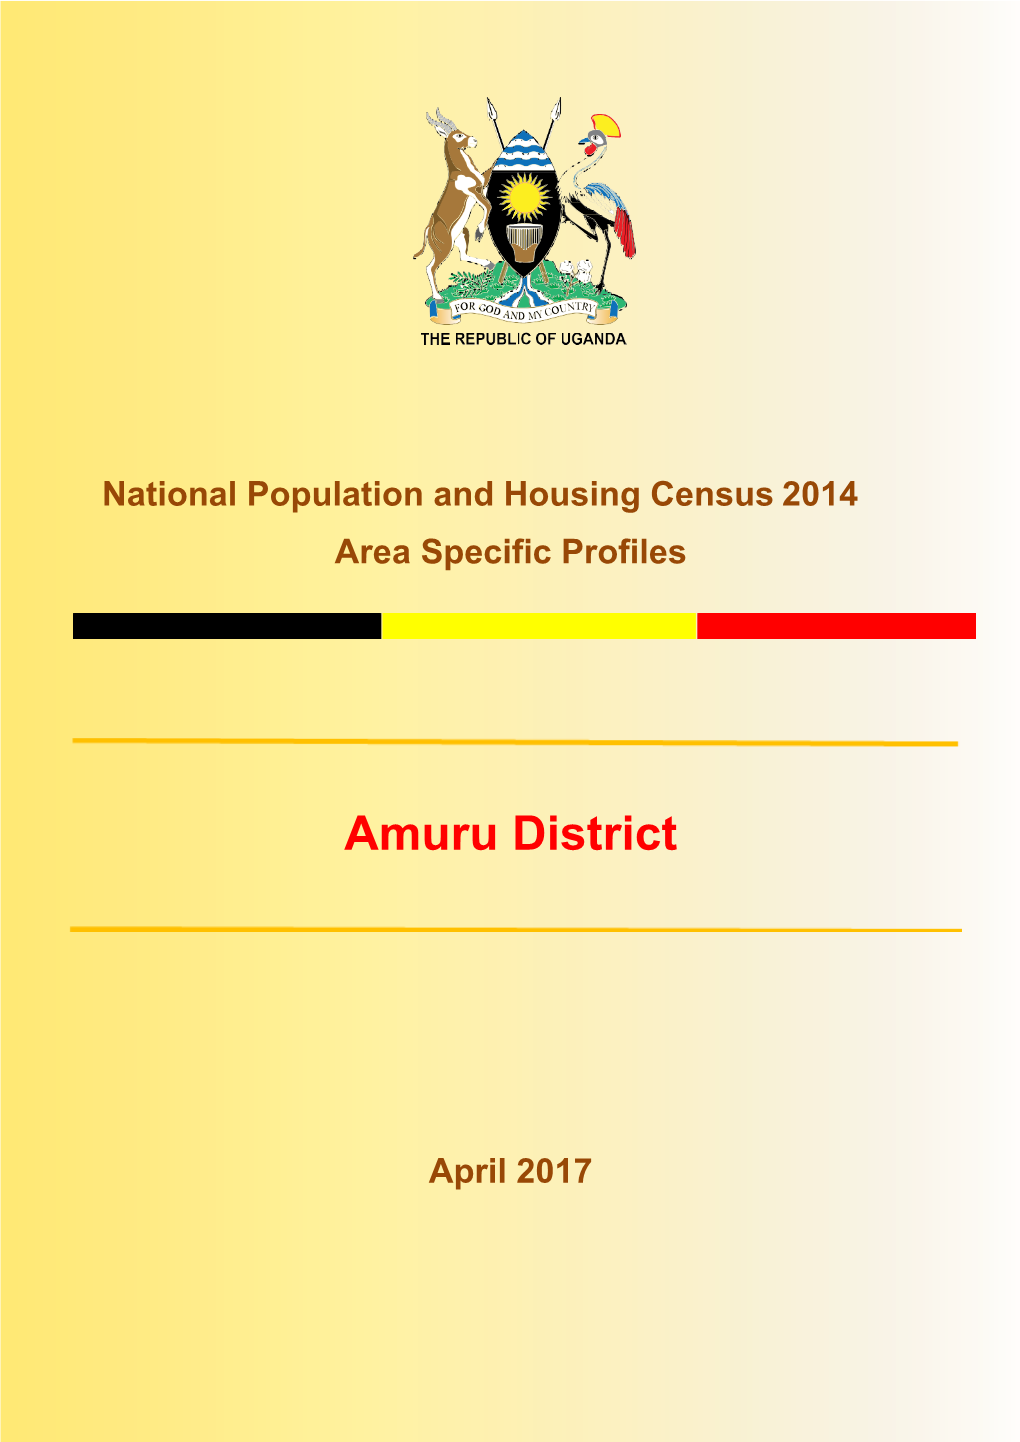 Amuru District